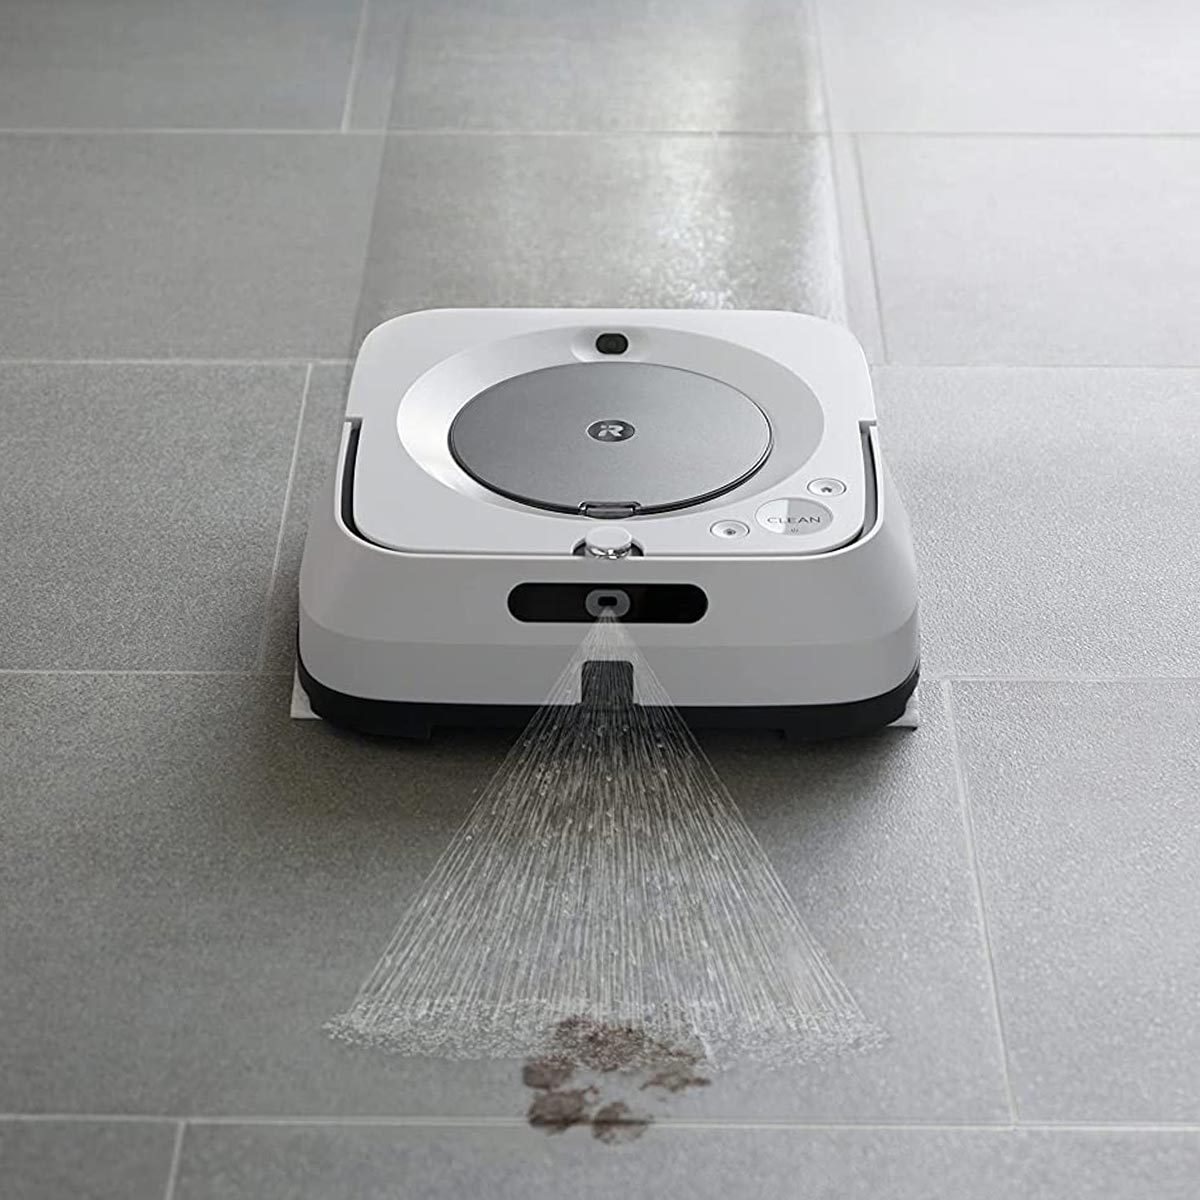 Best Robot Mops To Get Your Floors Squeaky Clean Ft Via Amazon.com